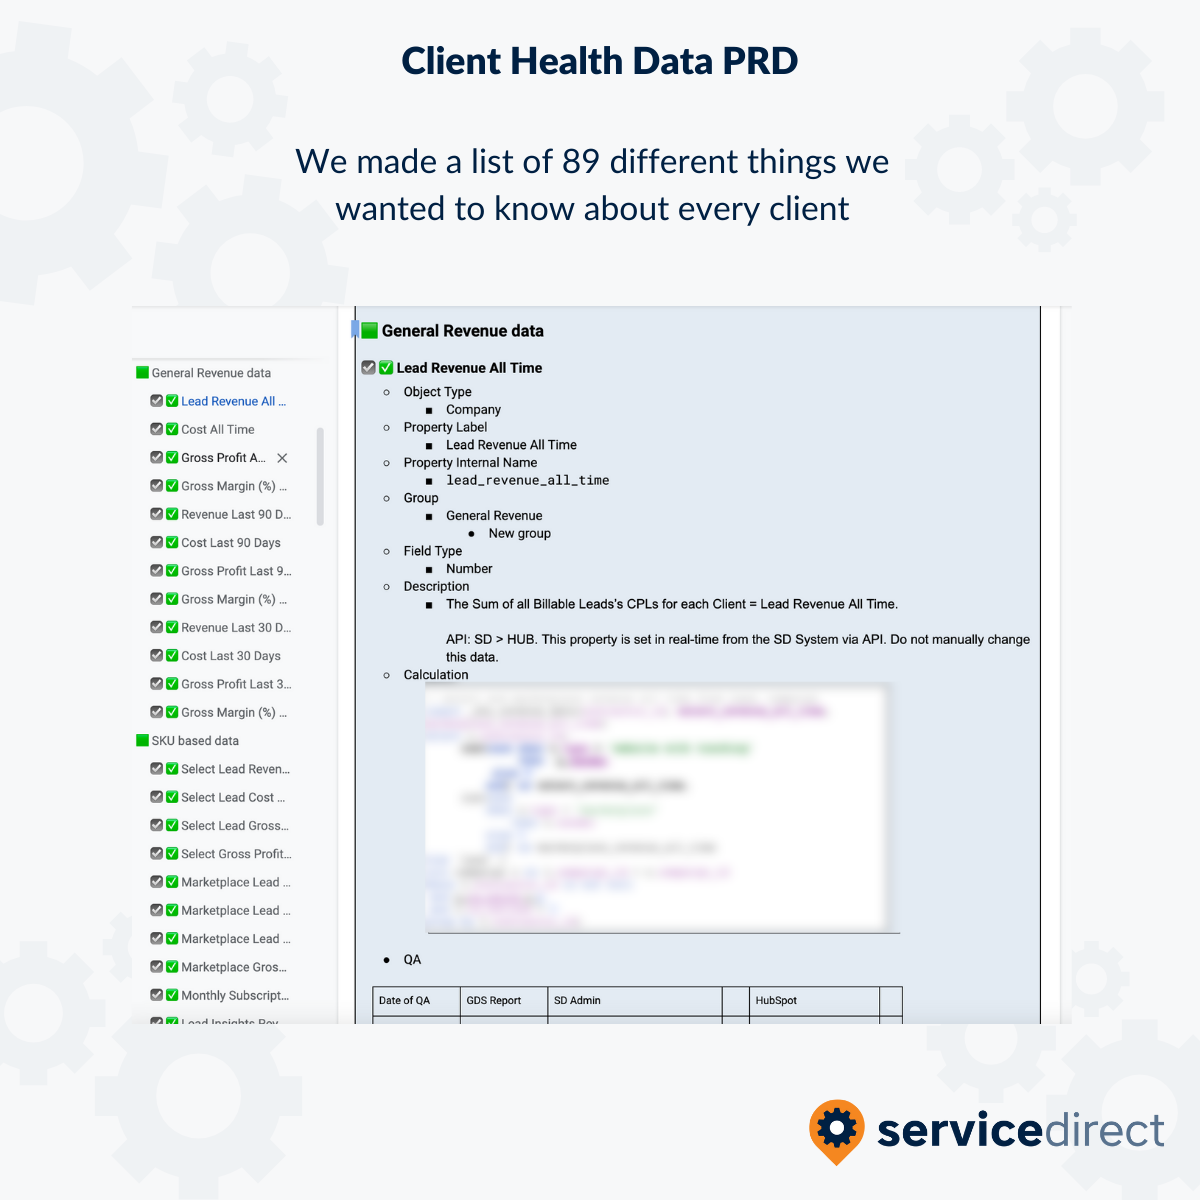 Client Health Data PRD Blurred